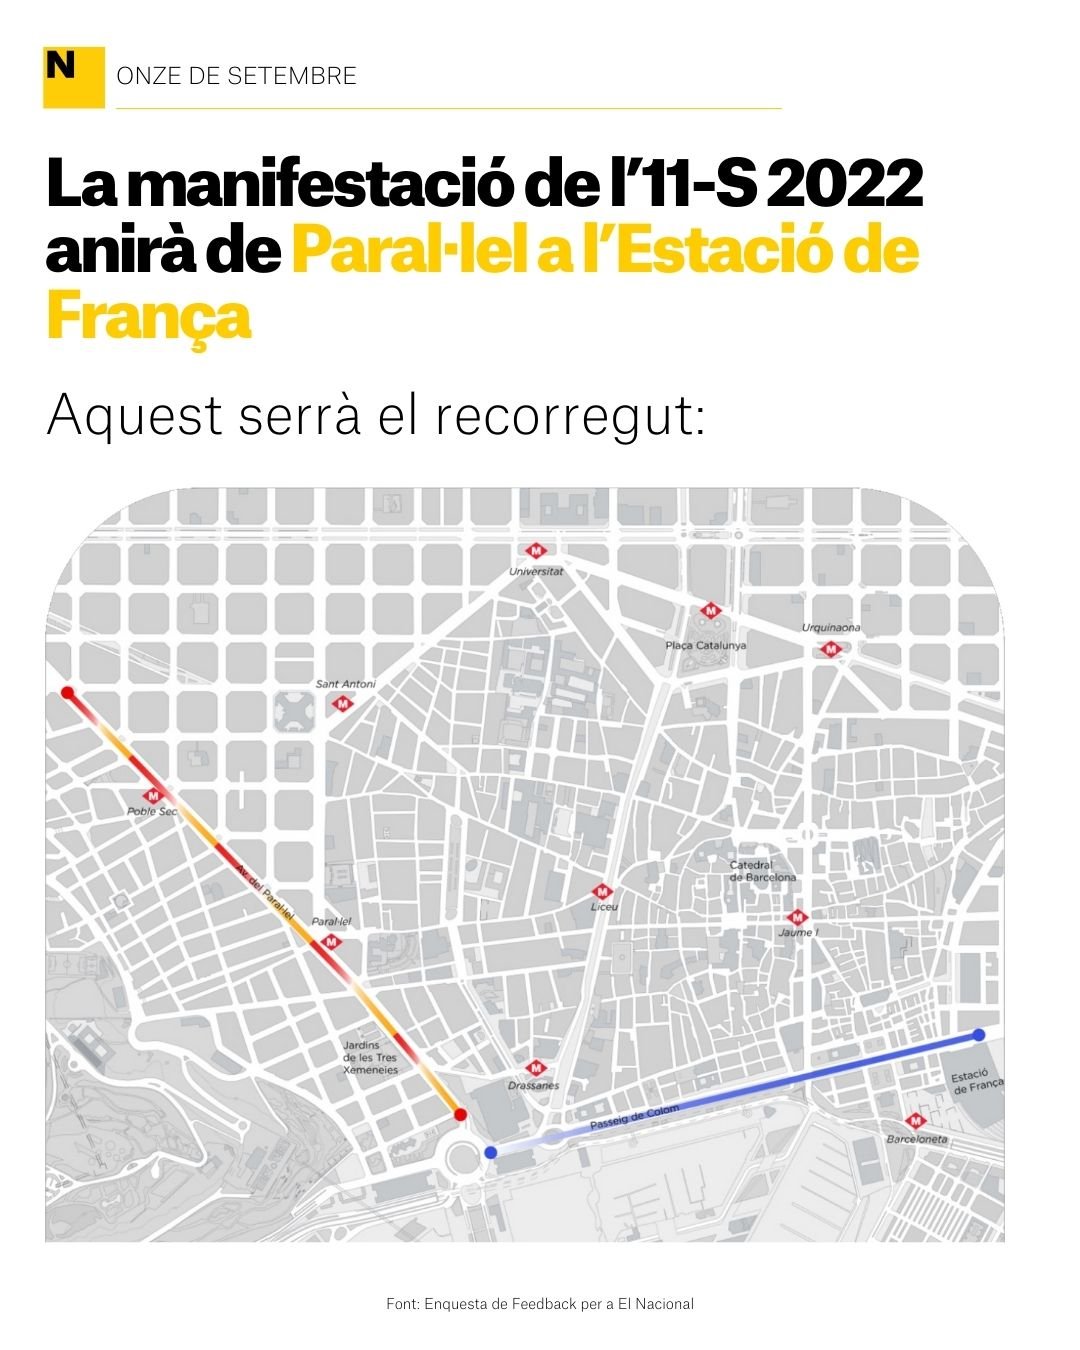 mapa manifestacio anc diada 2022 11 setembre barcelona